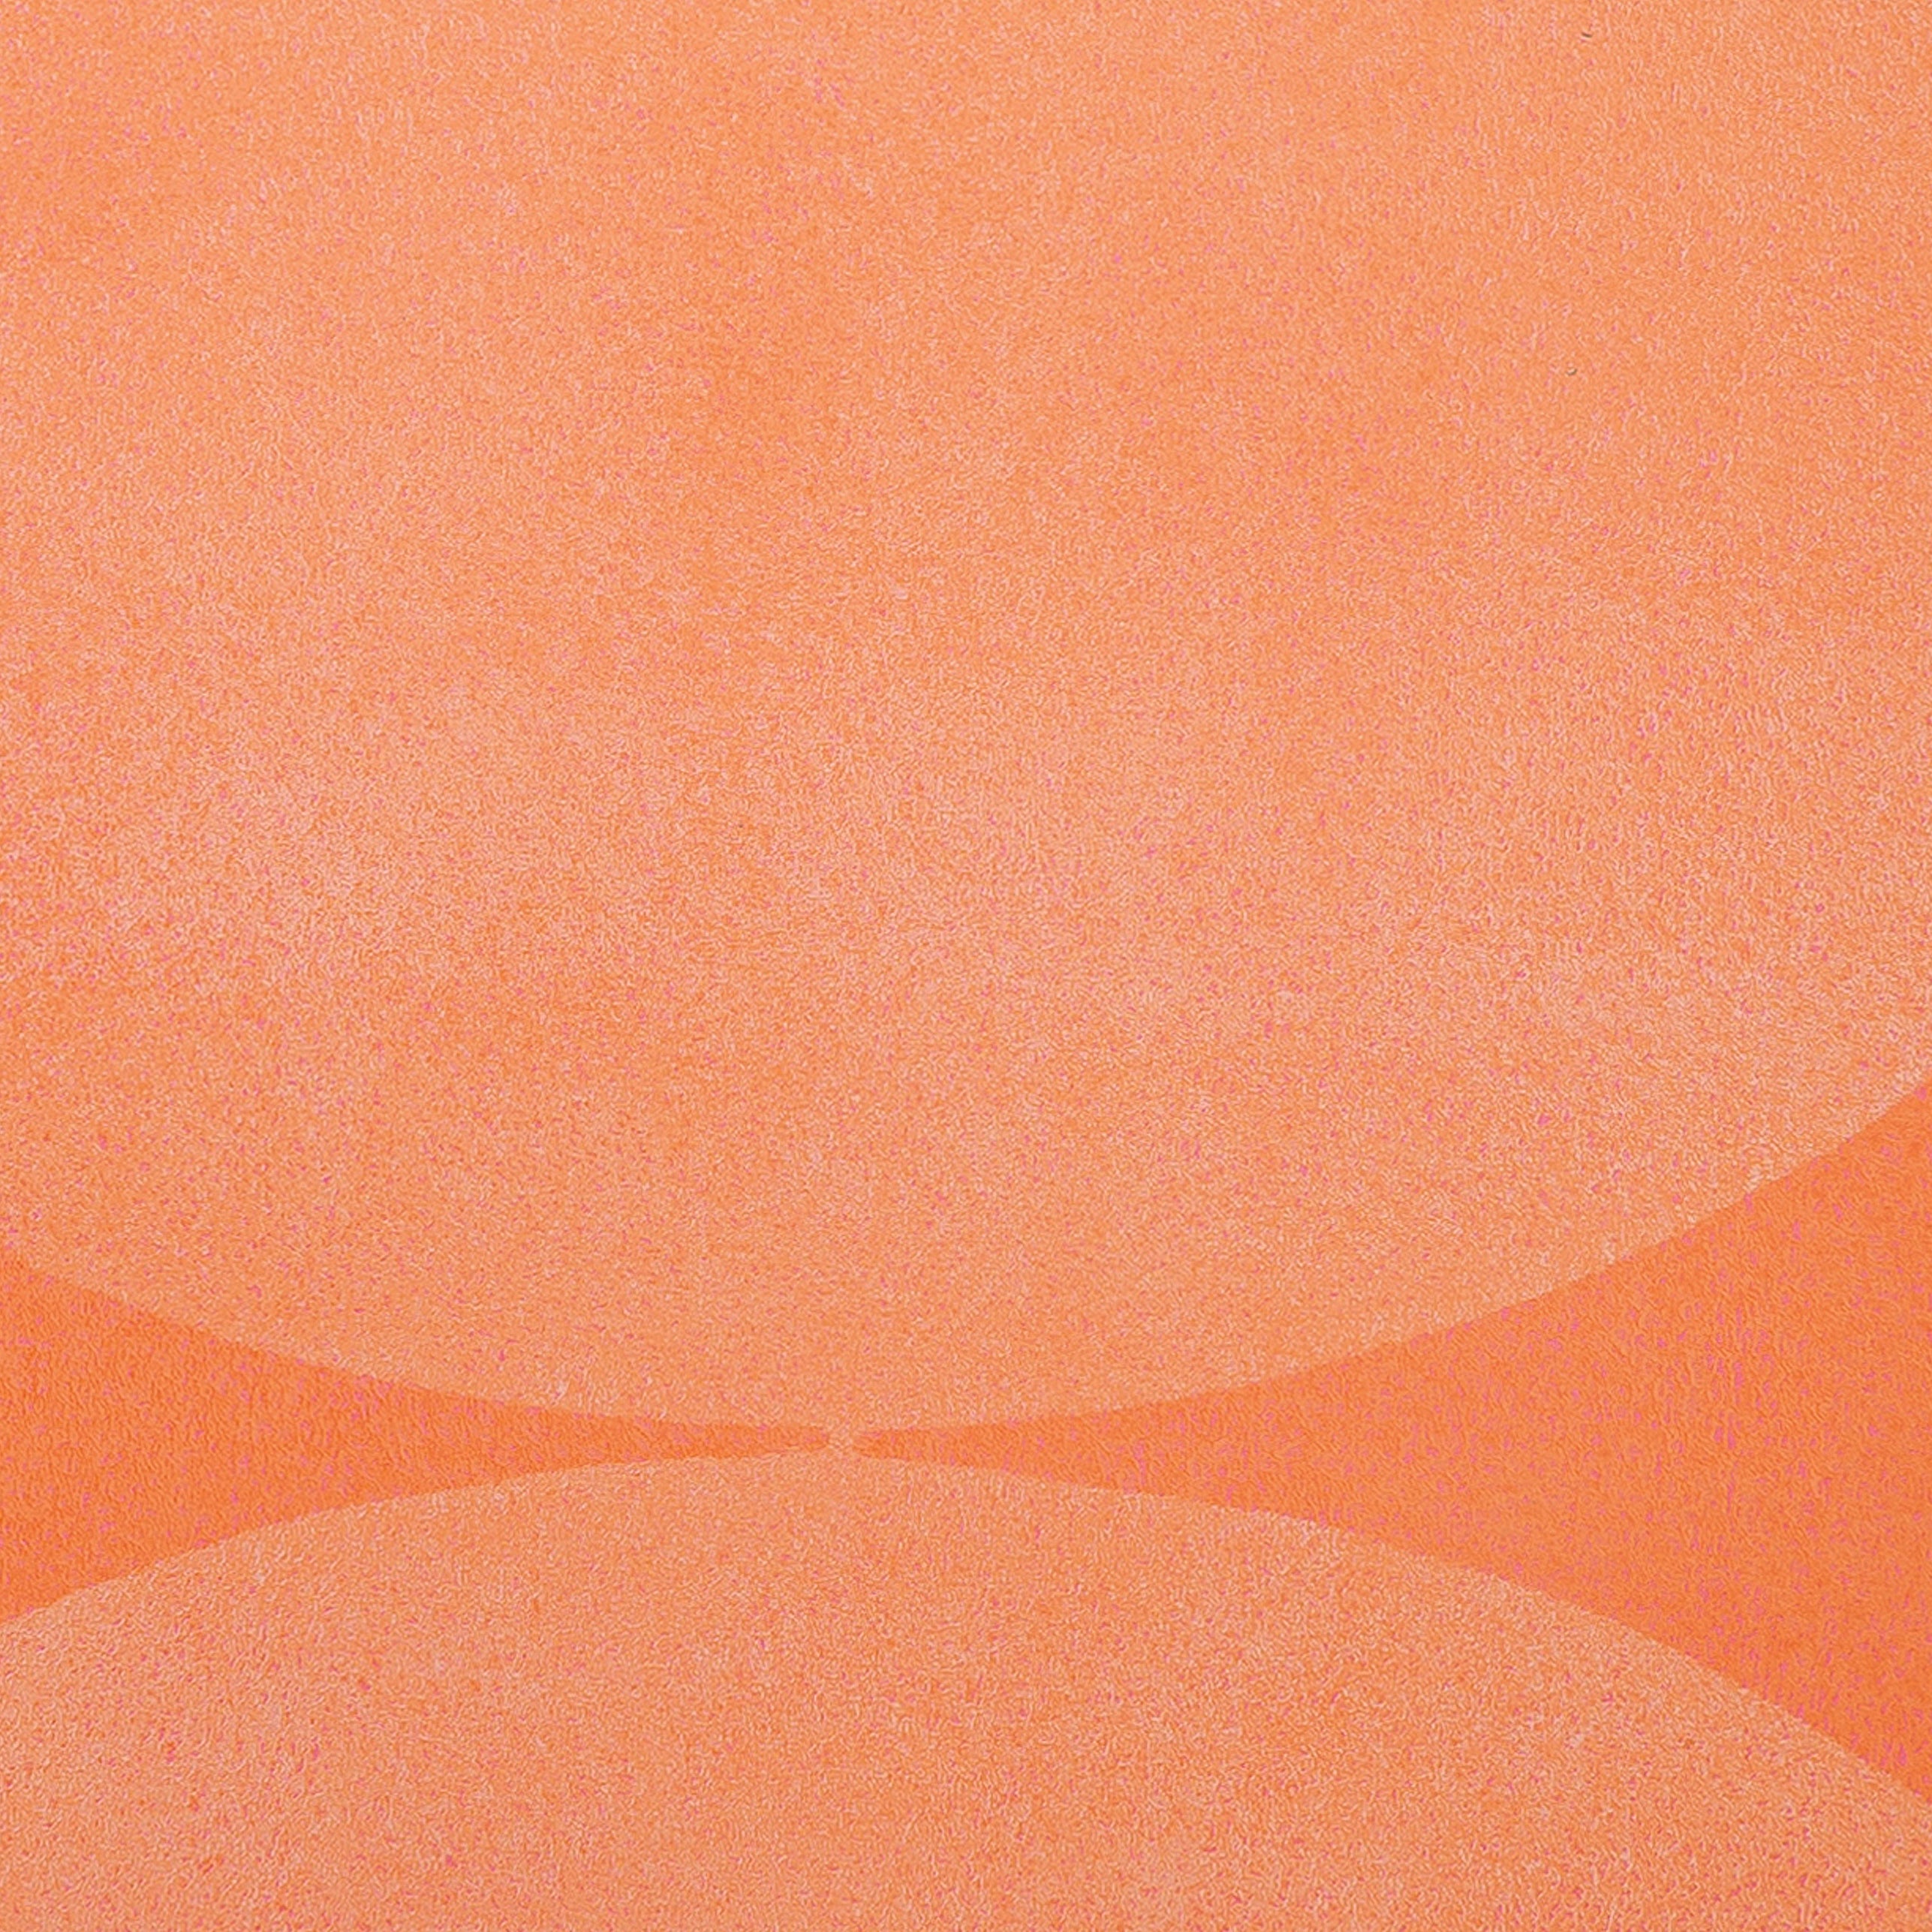 Large wall art in orange and pink circular forms I Handmade poster Enkel Art Studio